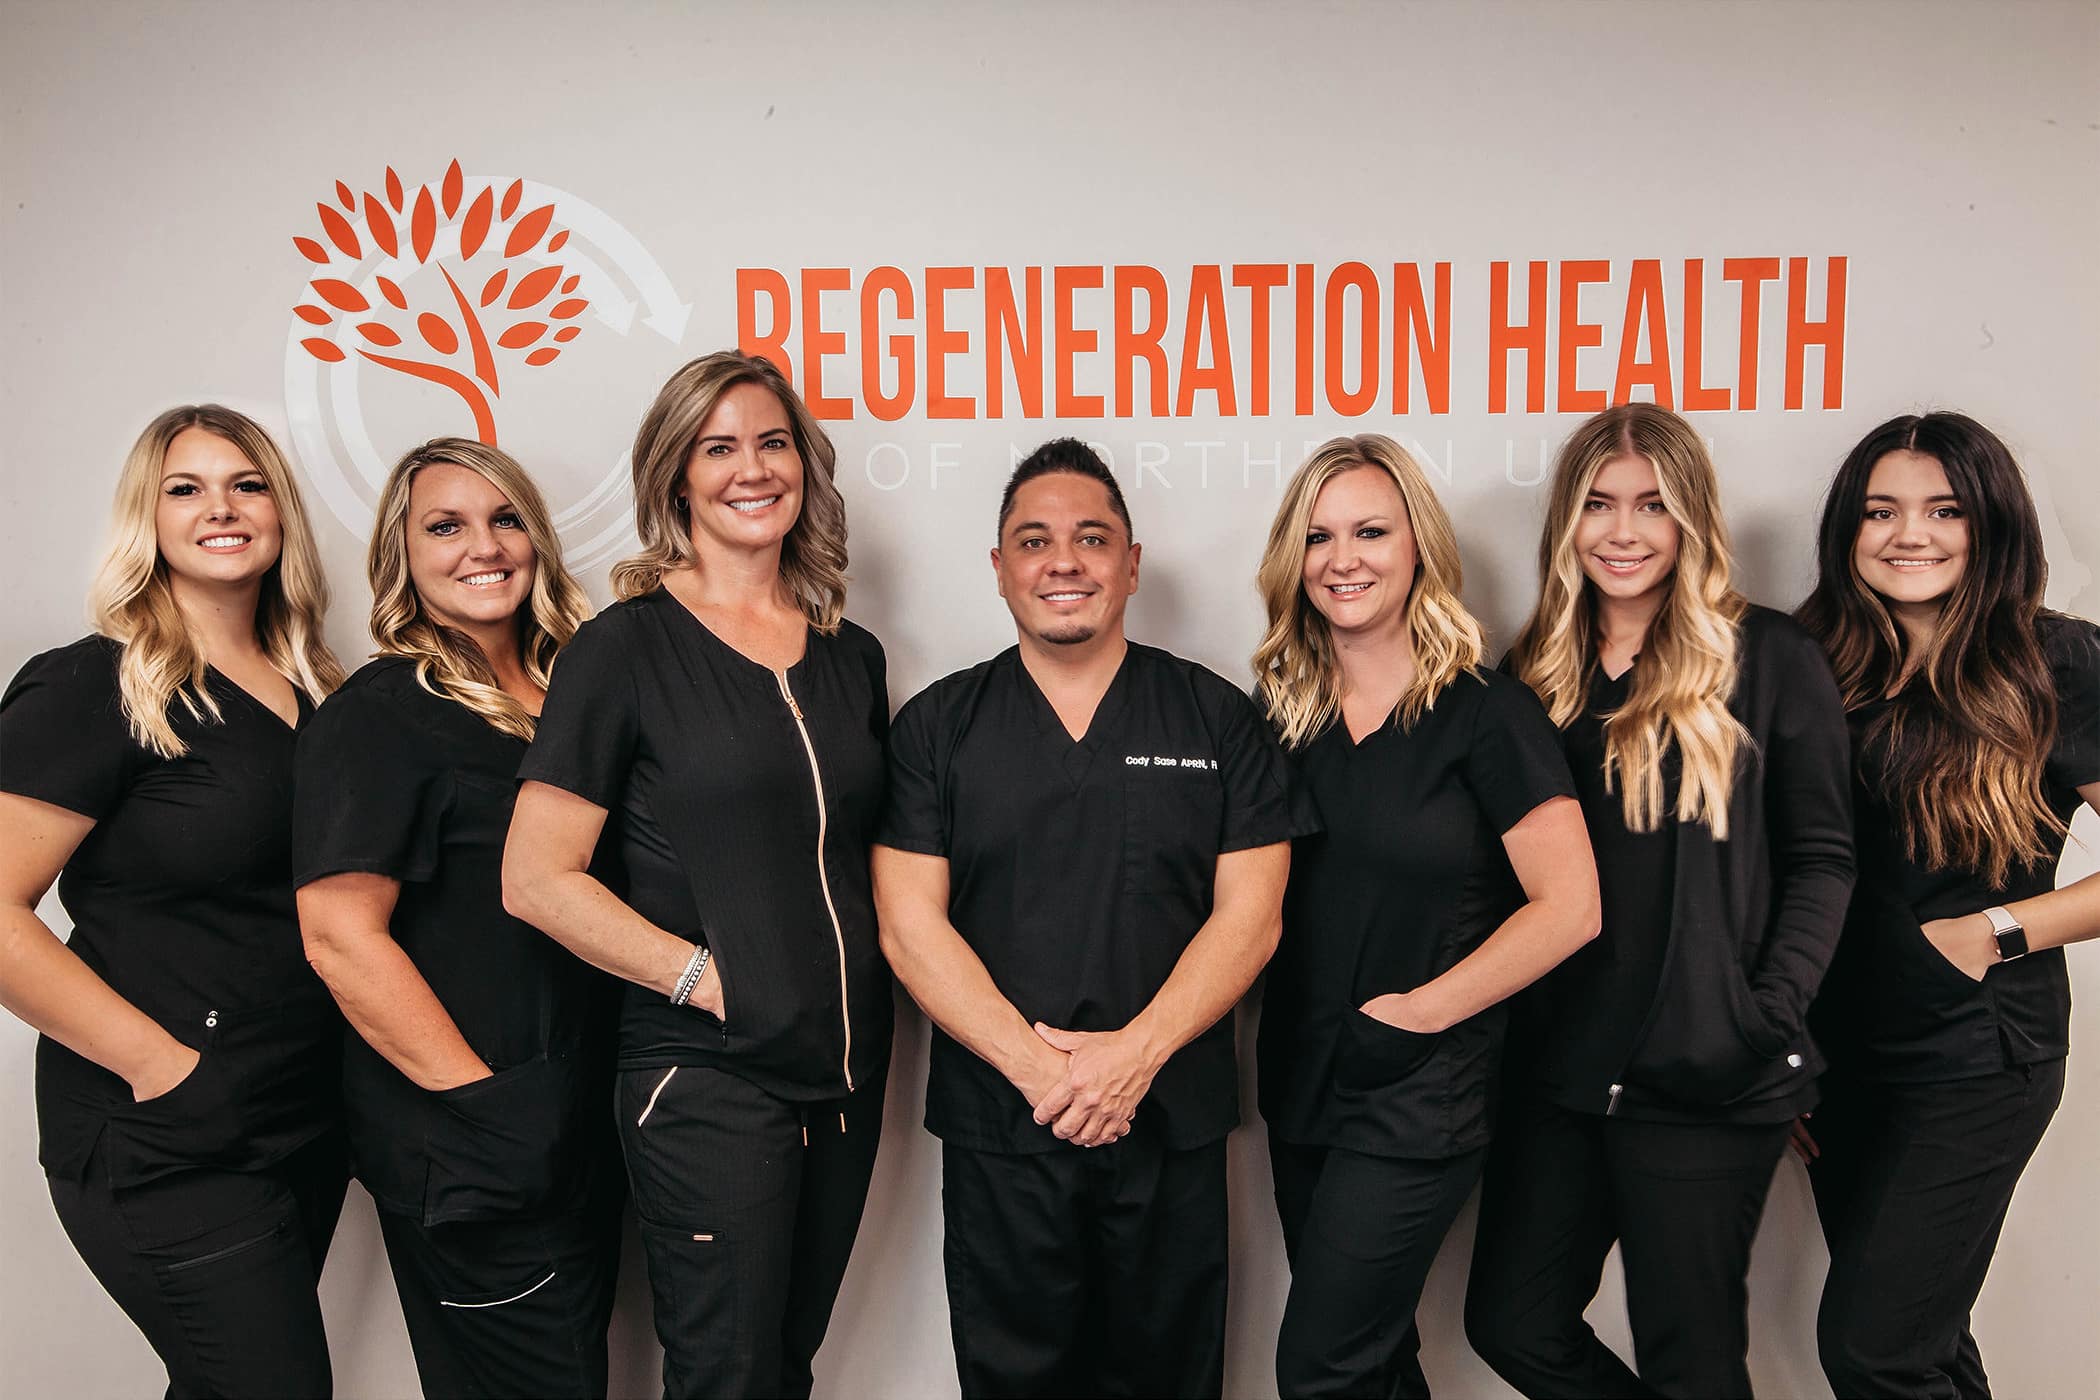 natural health clinic Regeneration Health Ogden Utah